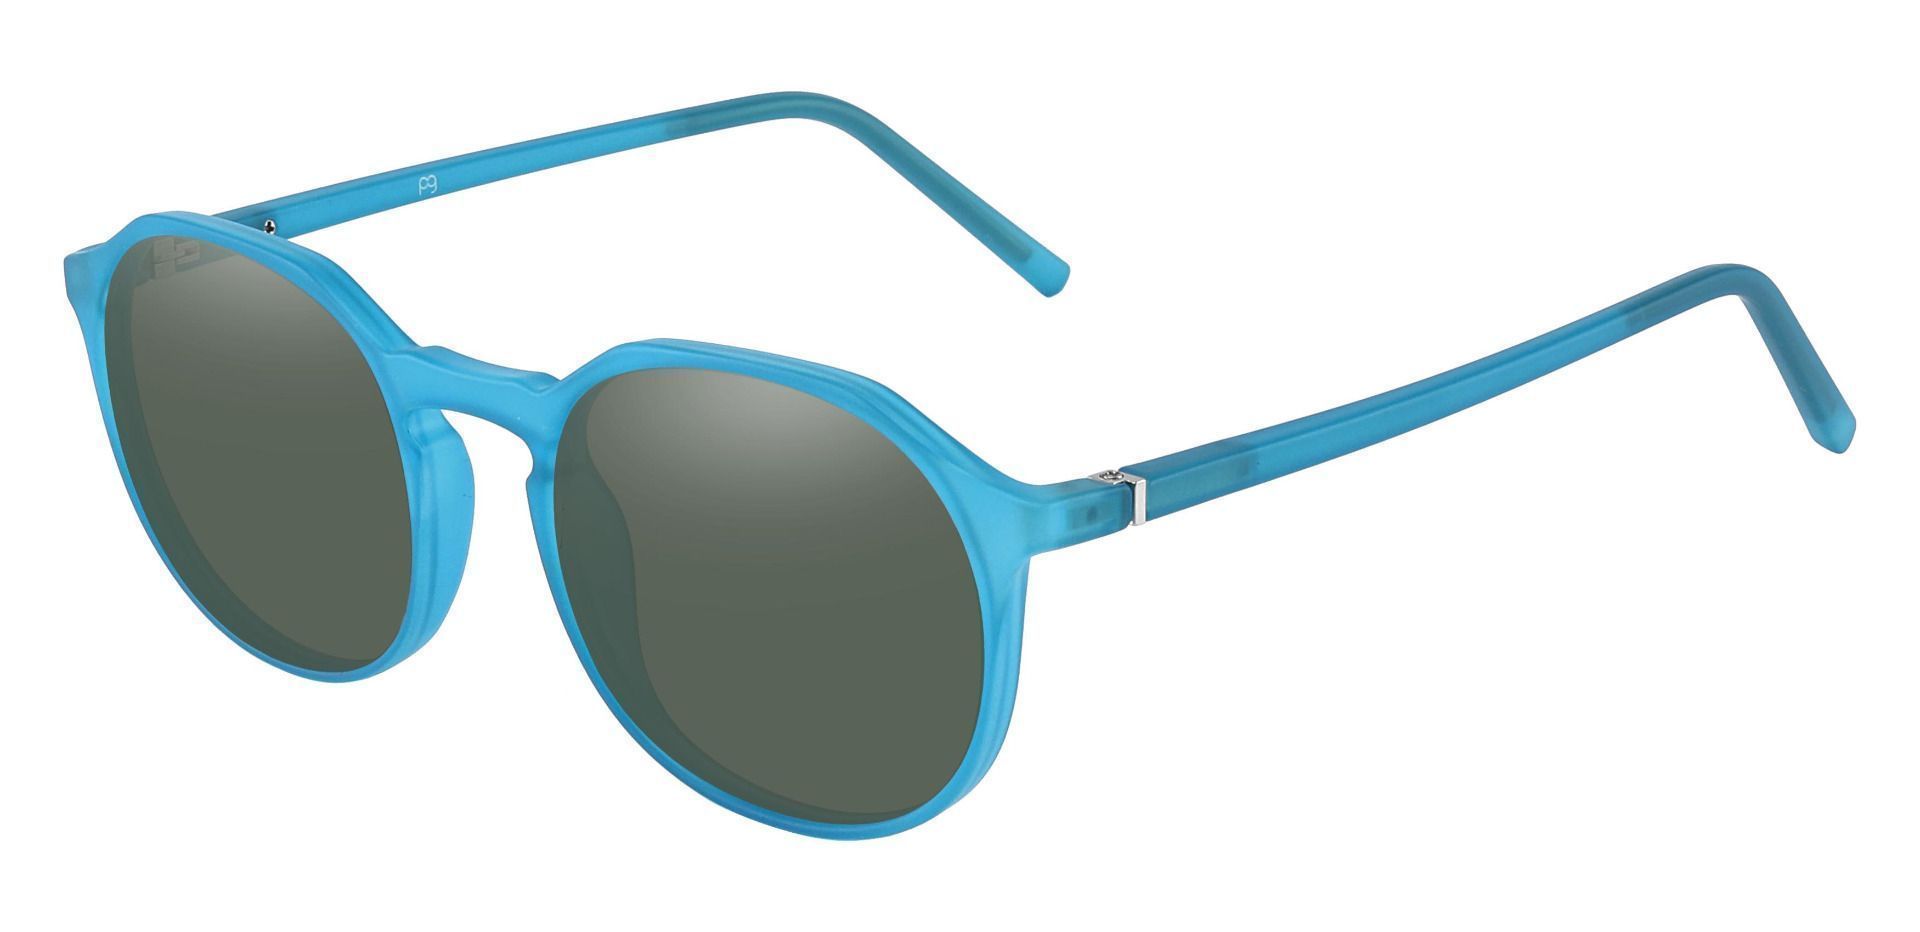 Belvidere Geometric Prescription Sunglasses - Blue Frame With Green Lenses